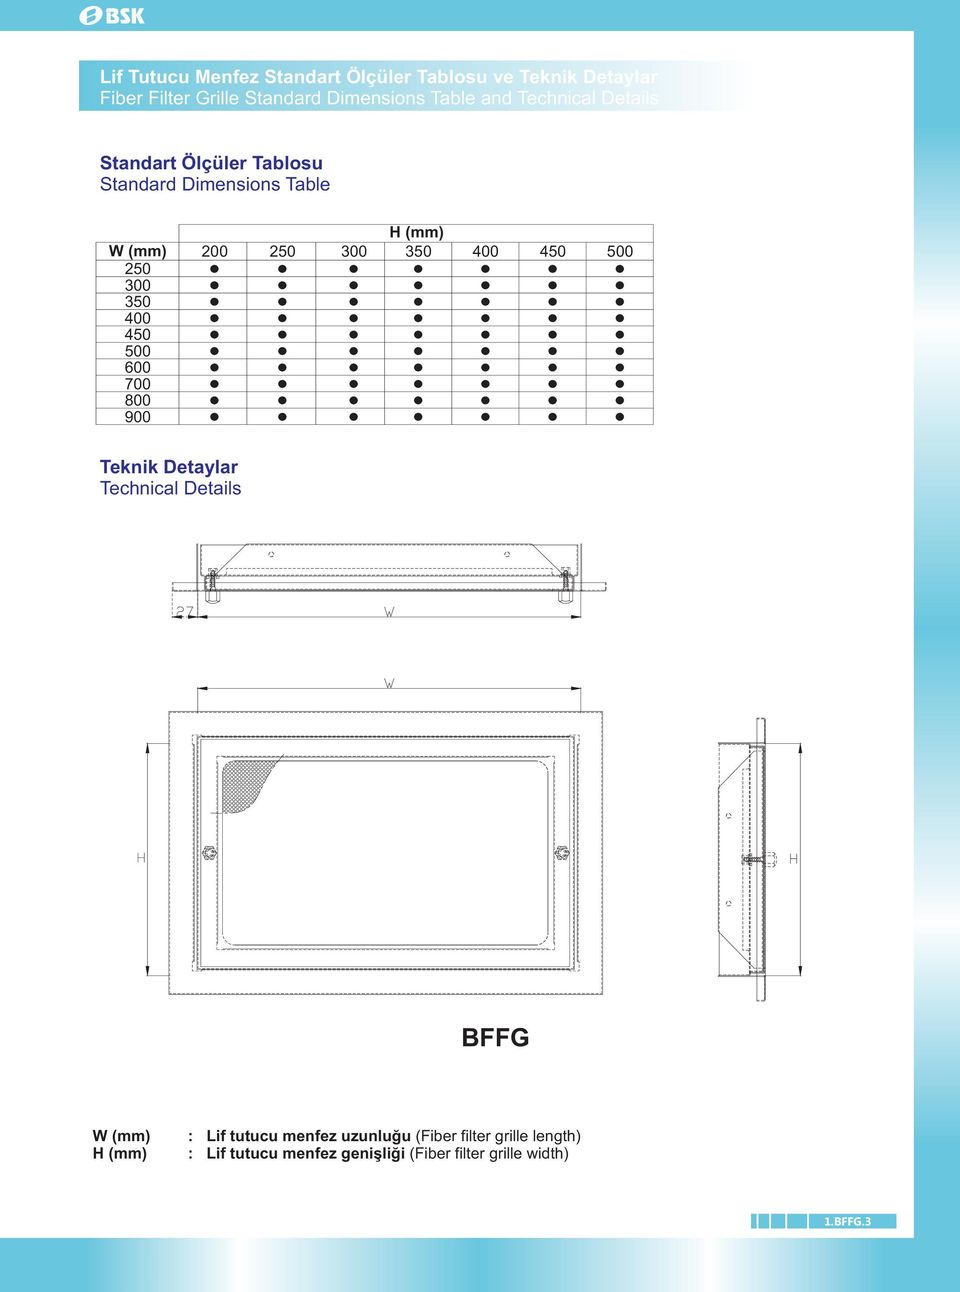 700 800 900 H (mm) 00 50 300 350 400 450 500 Teknik Detaylar Technical Details BFFG W (mm) H (mm) : Lif